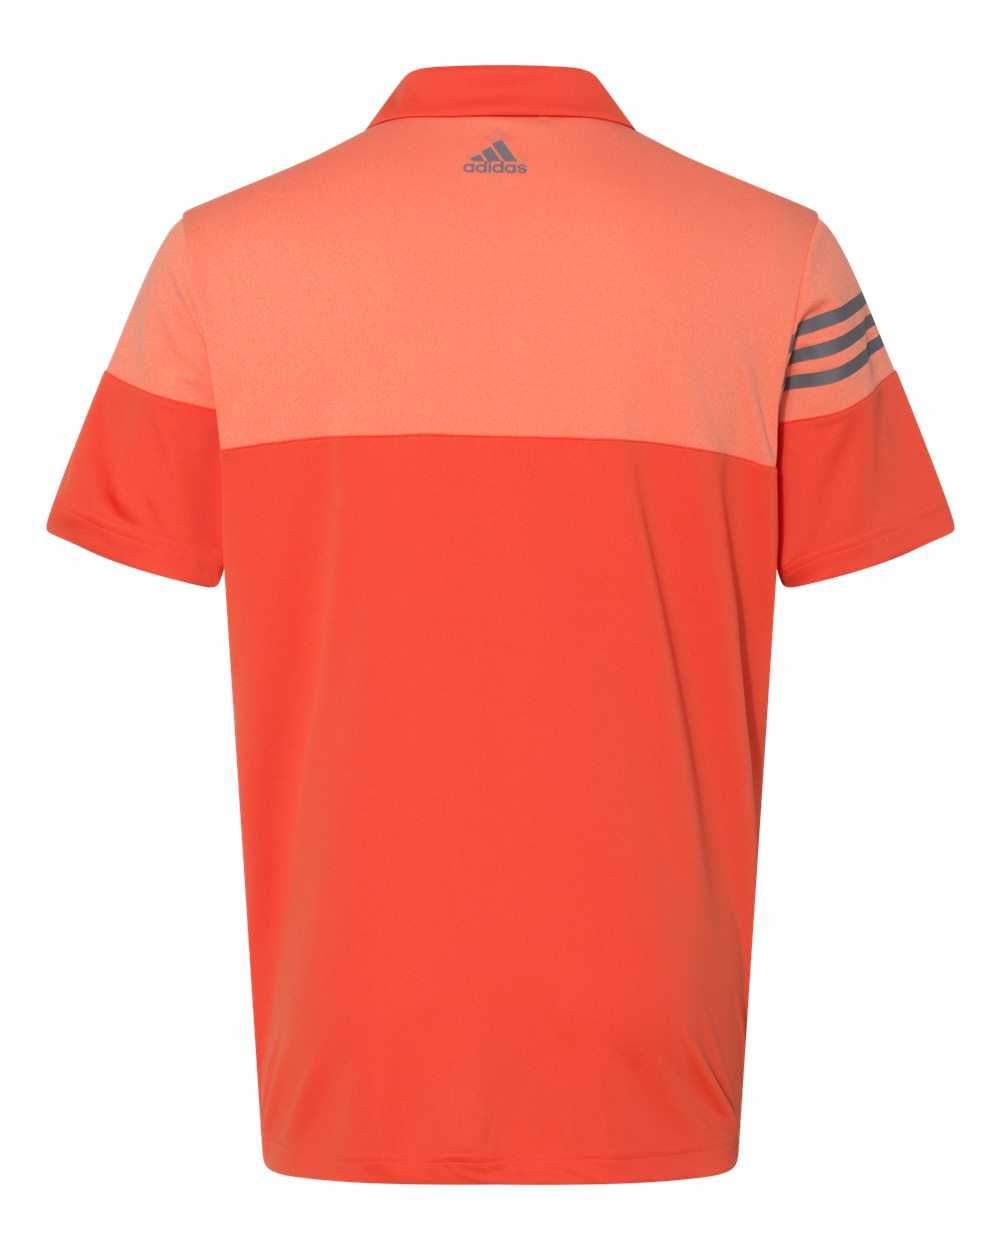 Adidas A213 Heathered 3-Stripes Block Sport Shirt - Blaze Orange Vista Grey - HIT a Double